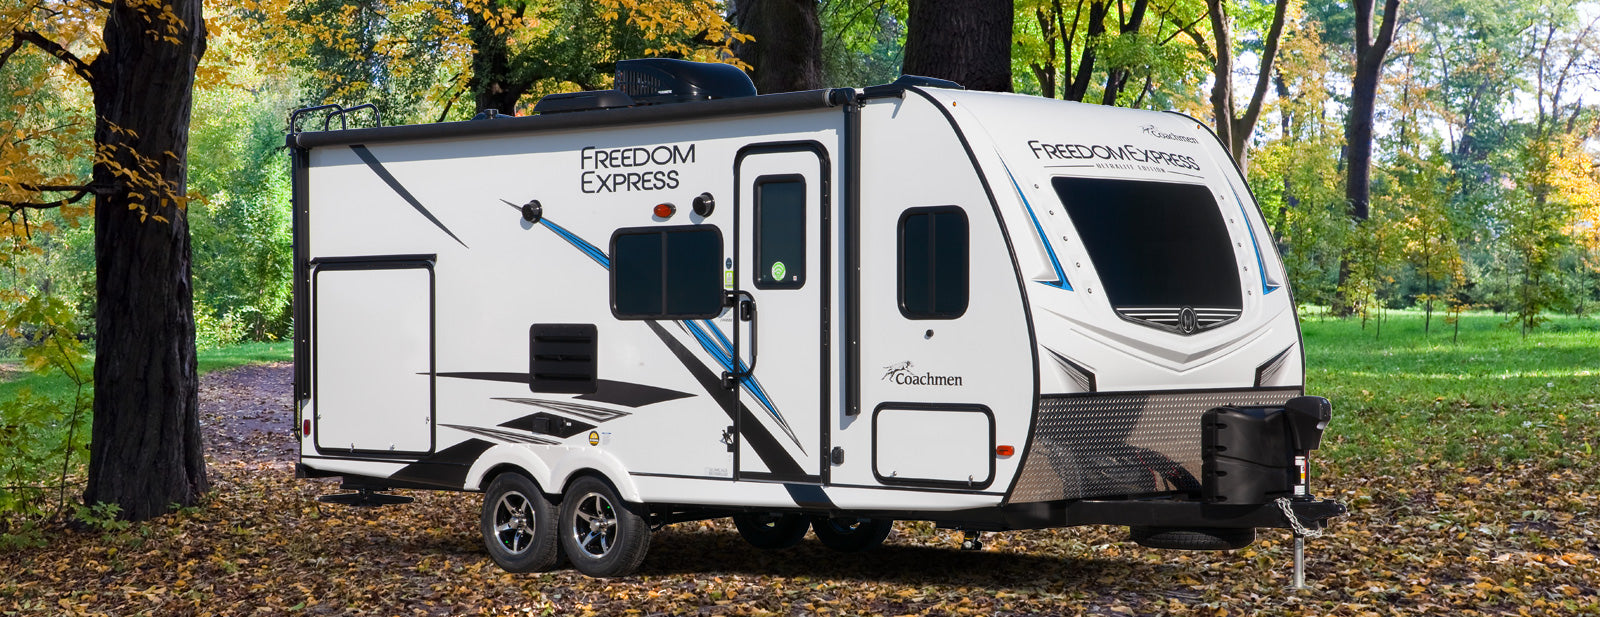 Freedom Express 192RBS Caravan